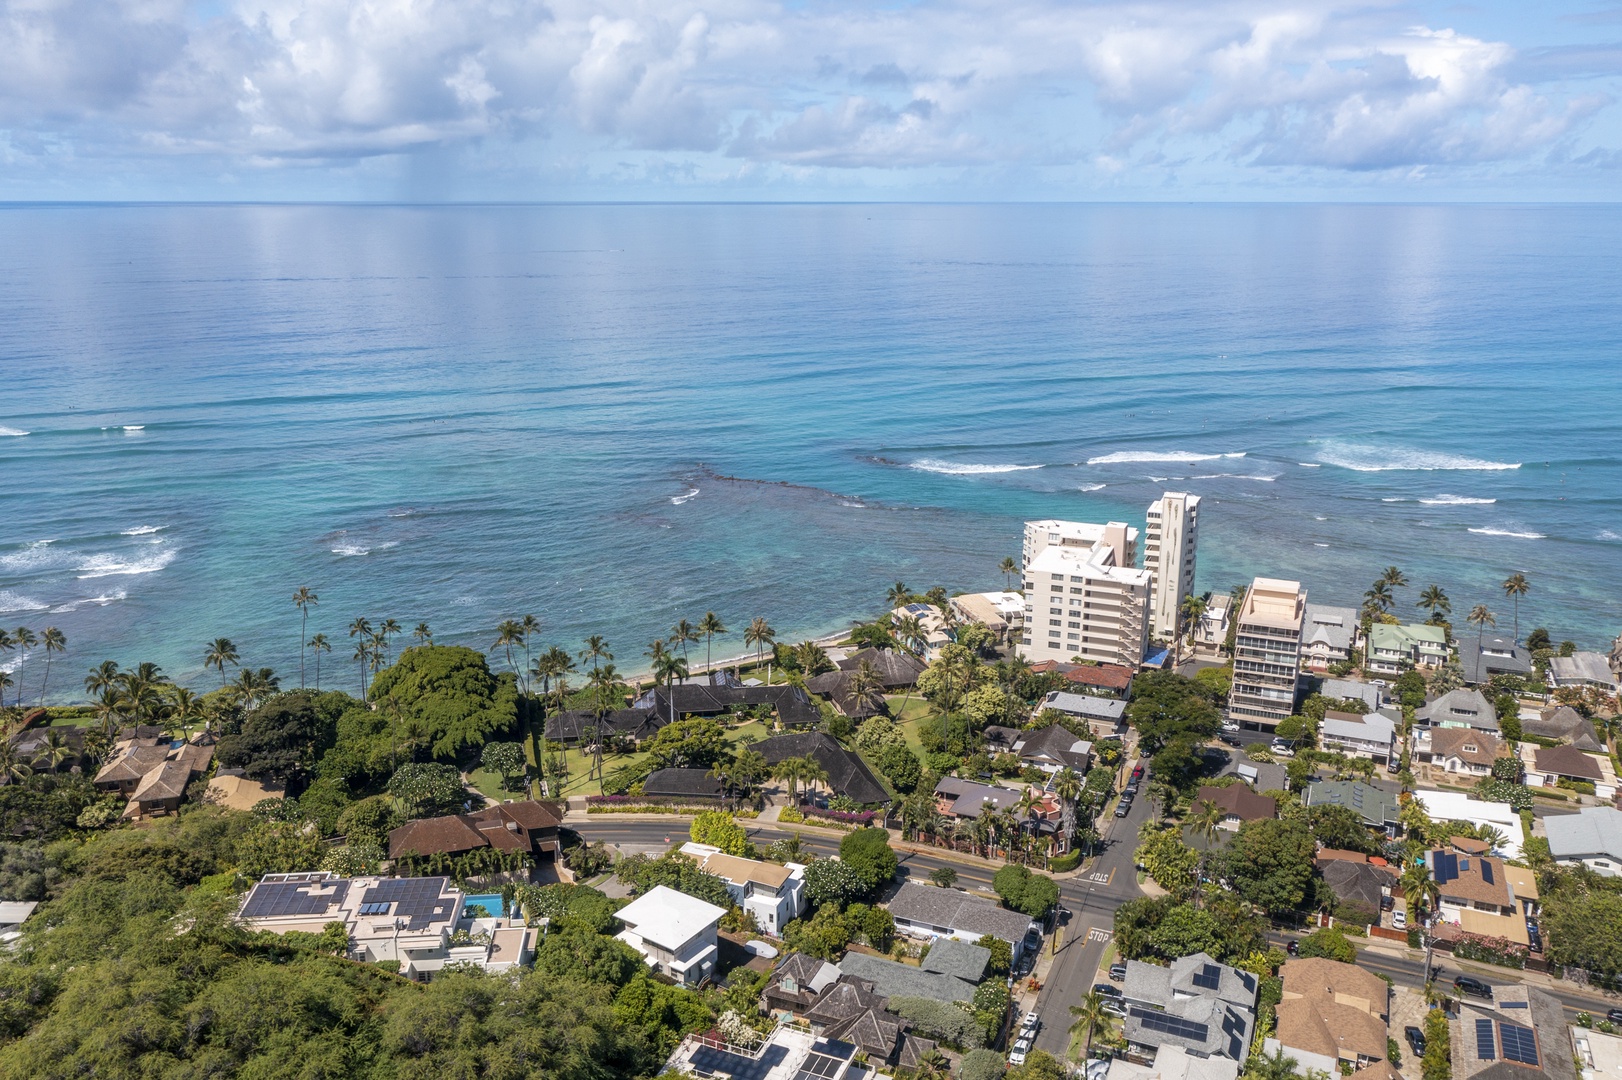 Honolulu Vacation Rentals, Hale Nui - Located near the surf break Tongs